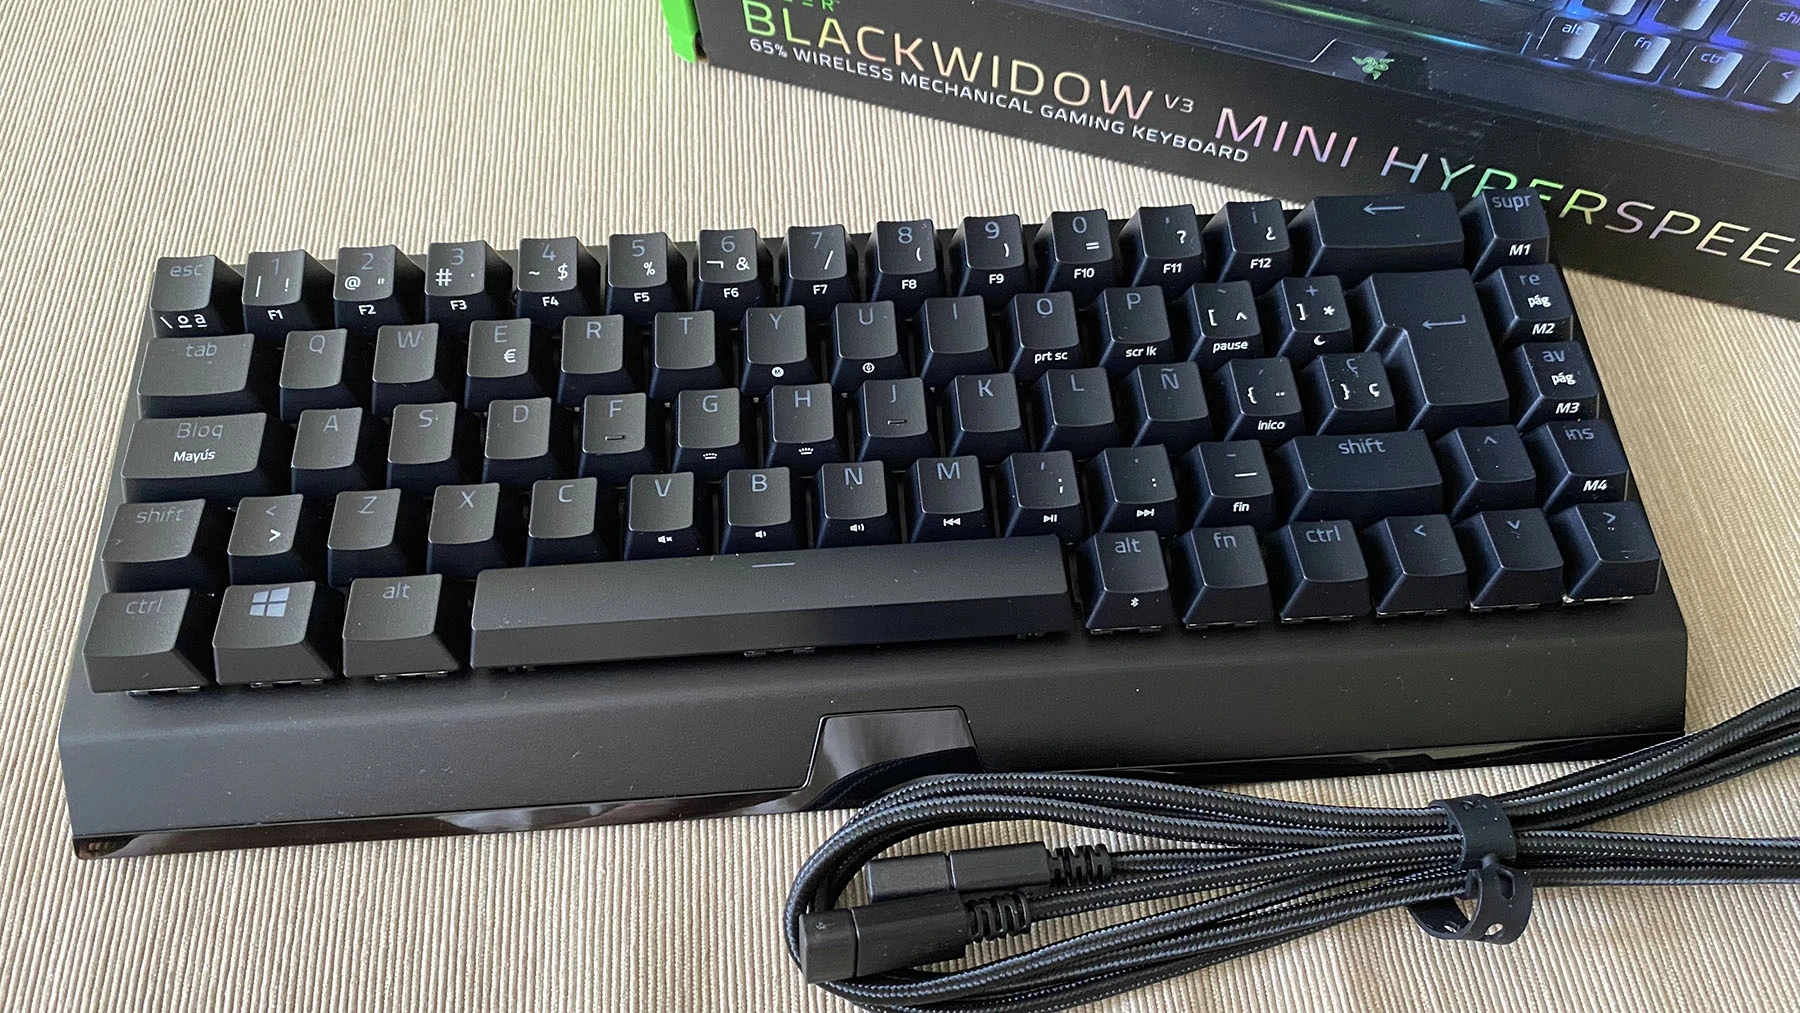 Razer BlackWidow V3 Mini HyperSpeed Review [Análisis Completo en Español]